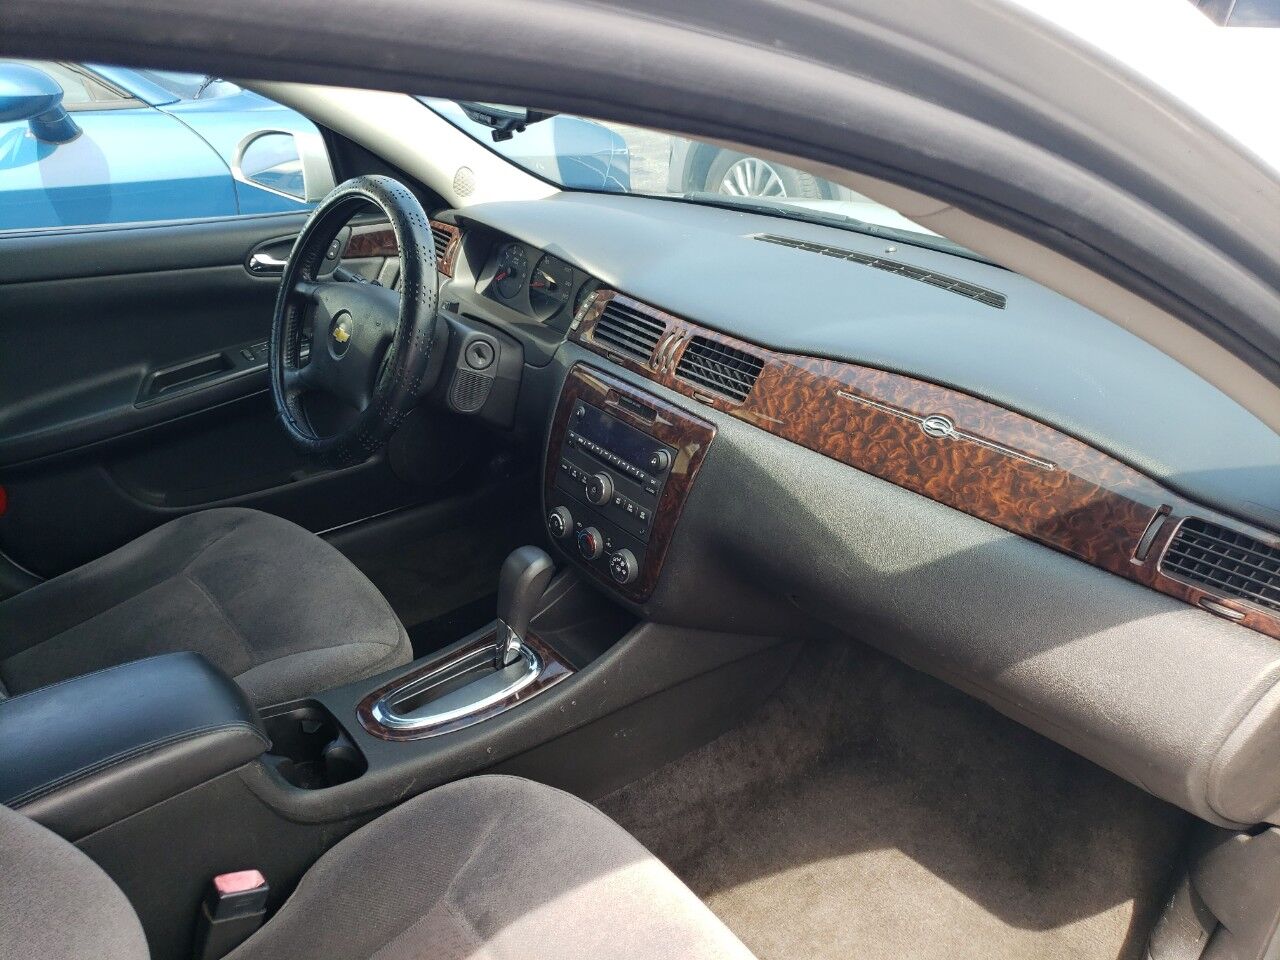 2013 CHEVROLET Impala Sedan - $7,500